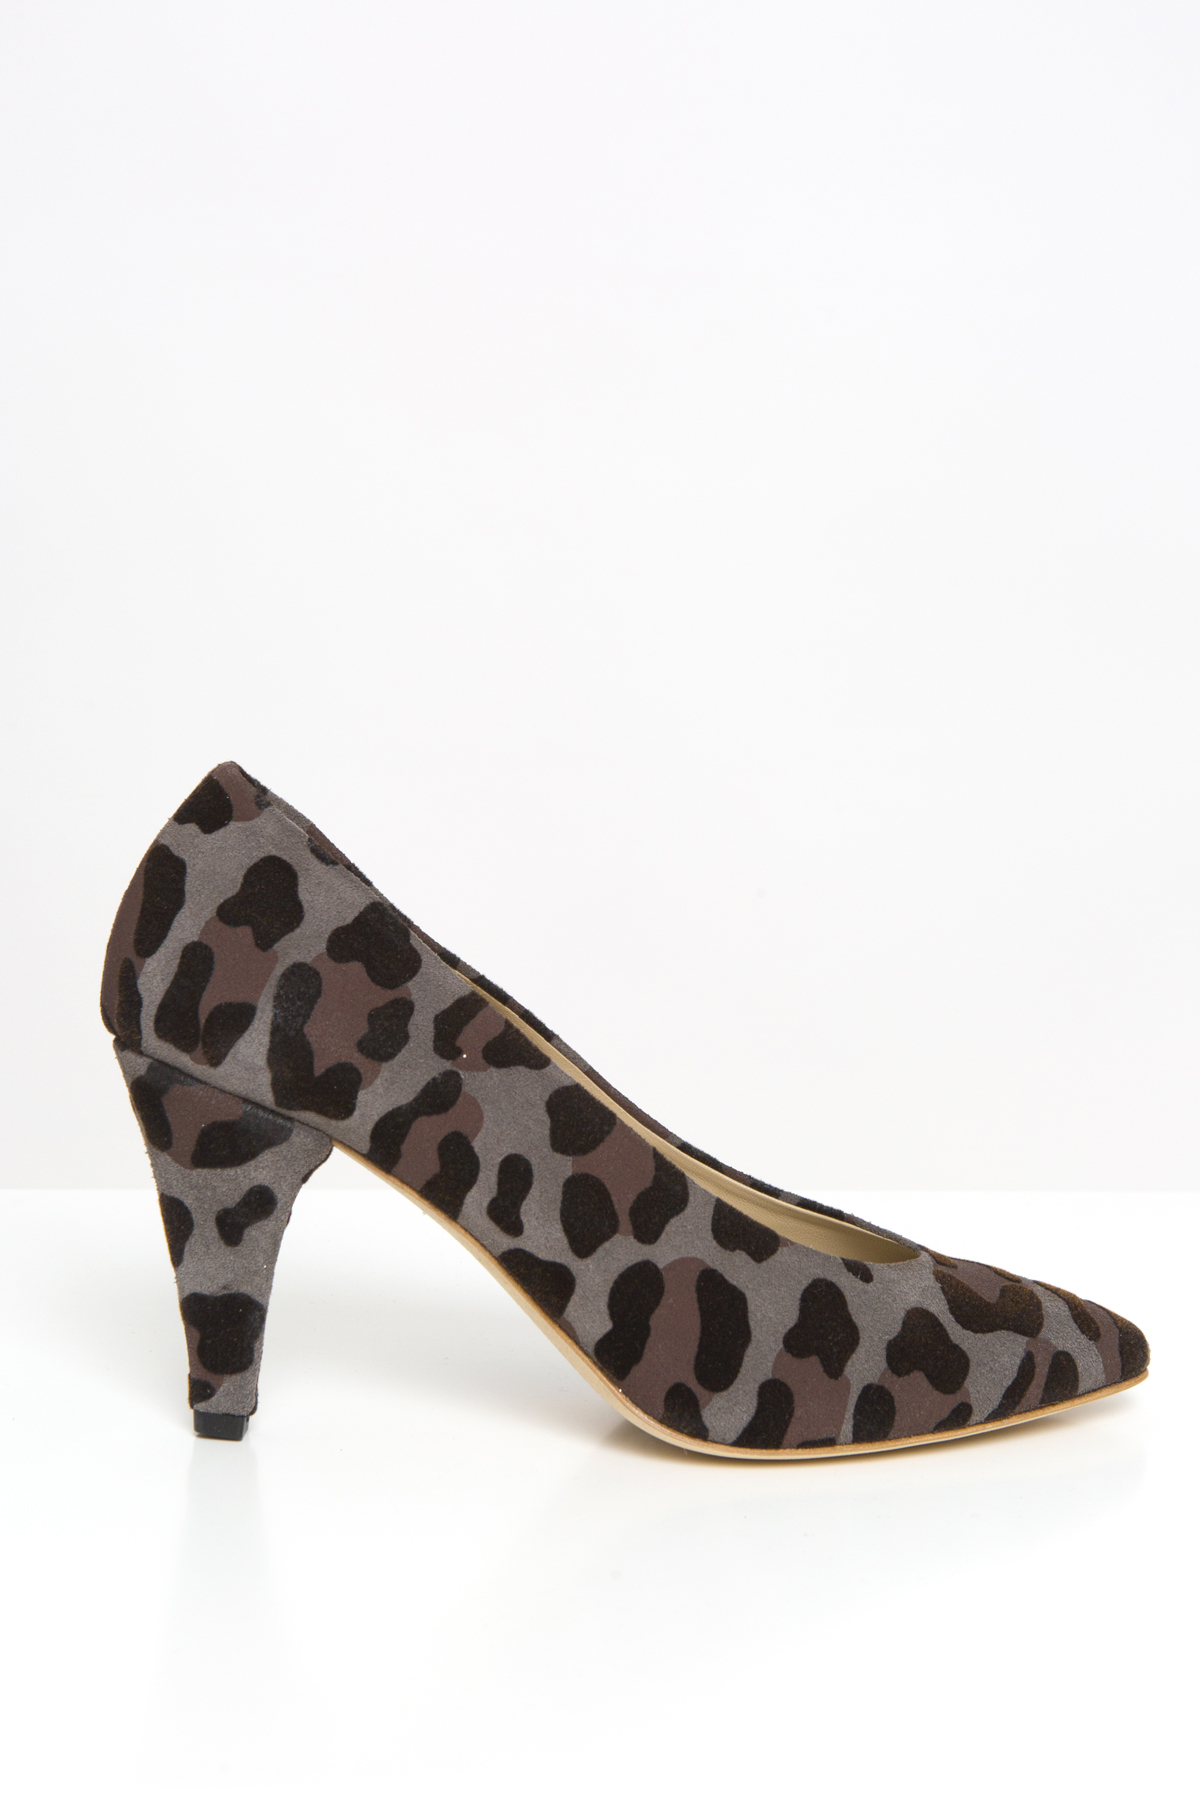 clef-pumps-heels-leather-leopard-animal-print-anniel-matchboxathens